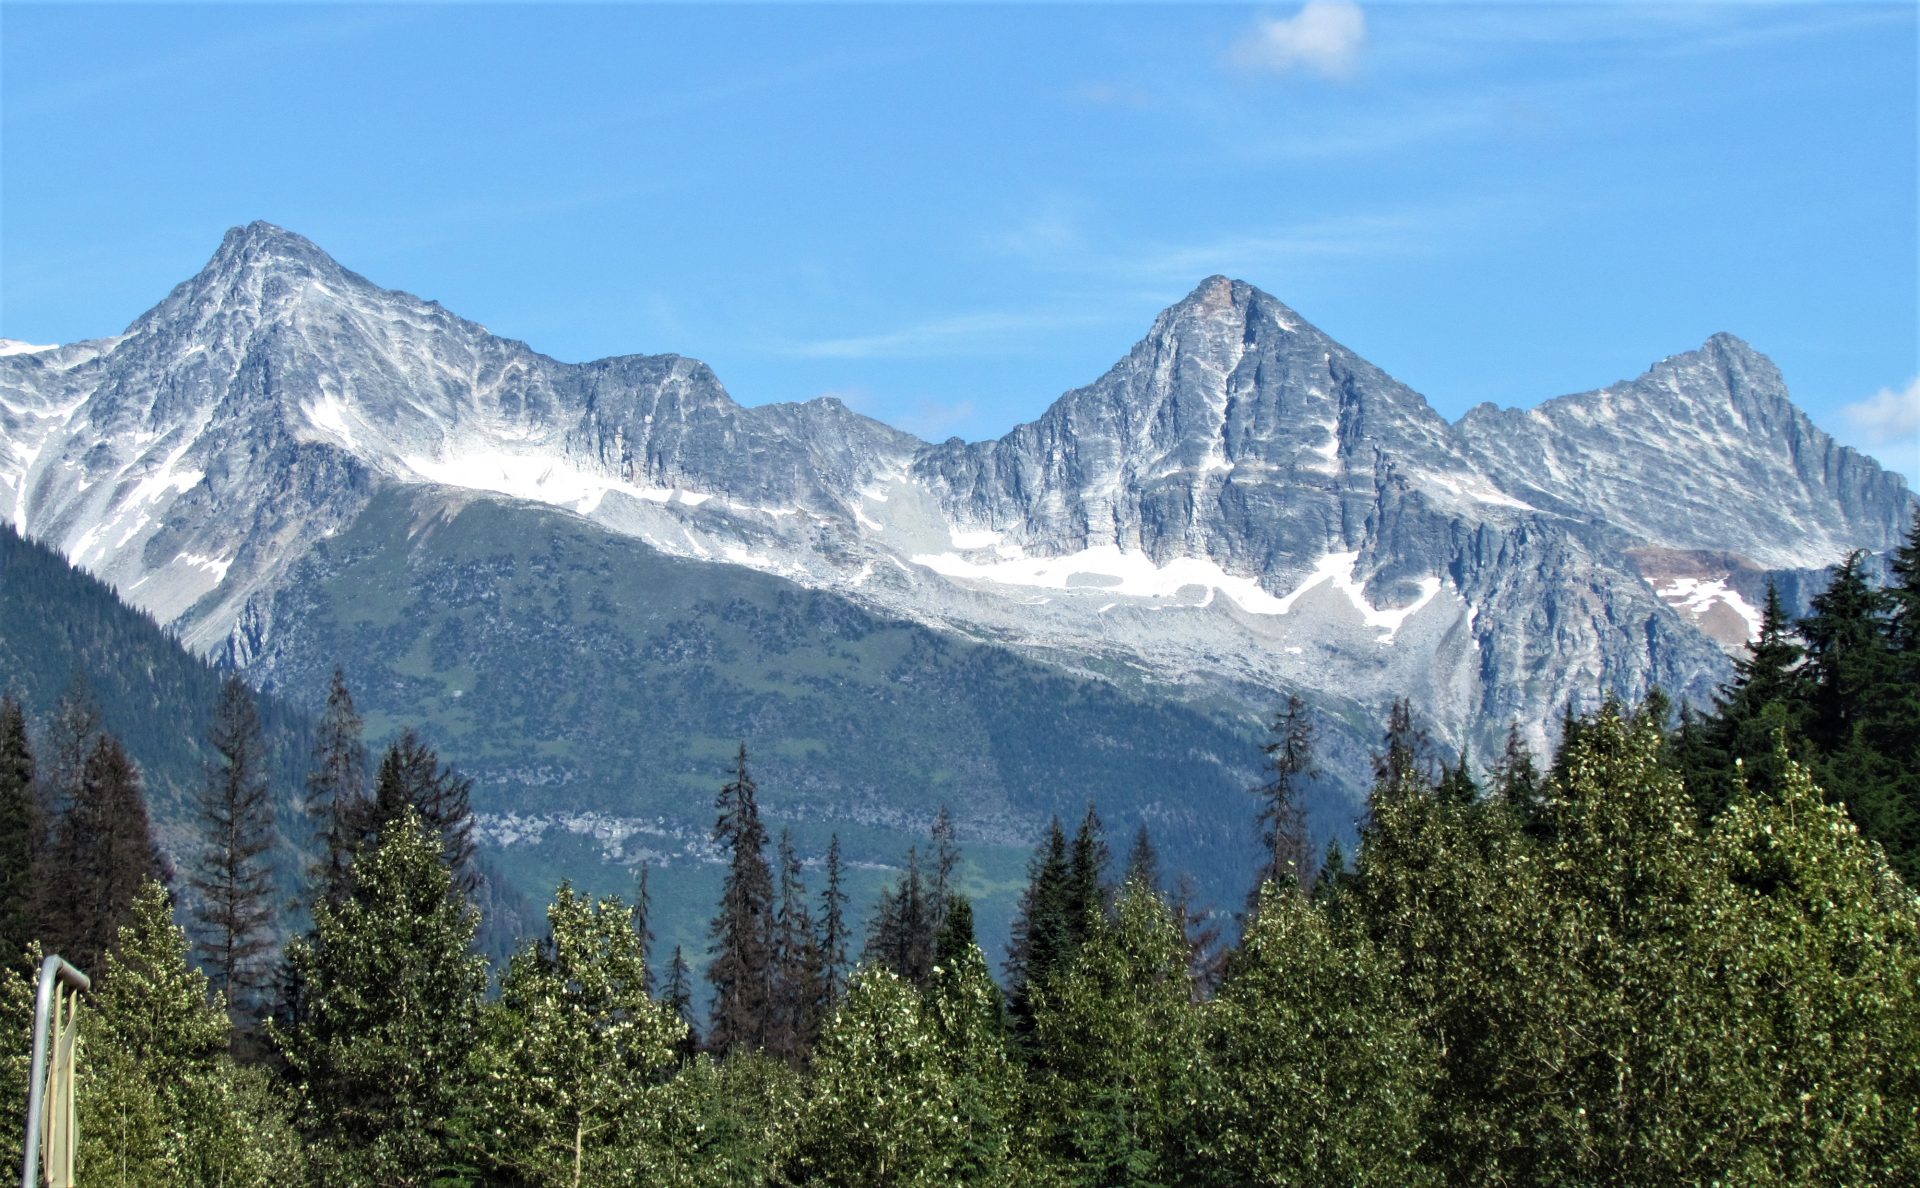 British Columbia – My 10th province (Aug 21 to 28)